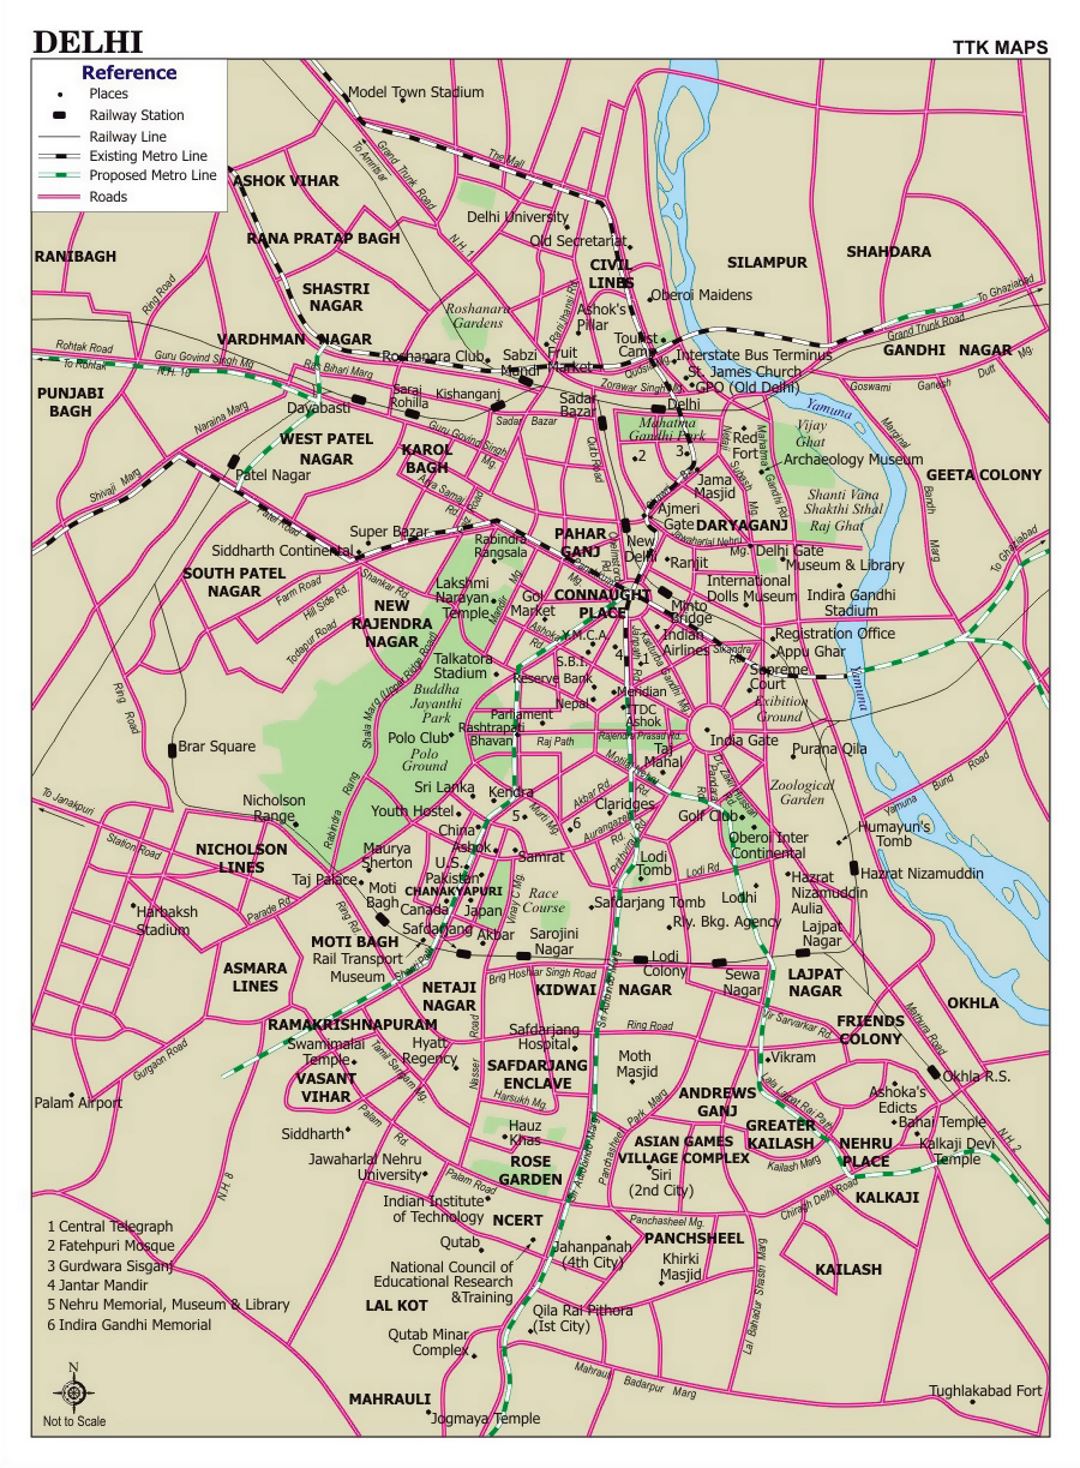 Detailed road map of Delhi city